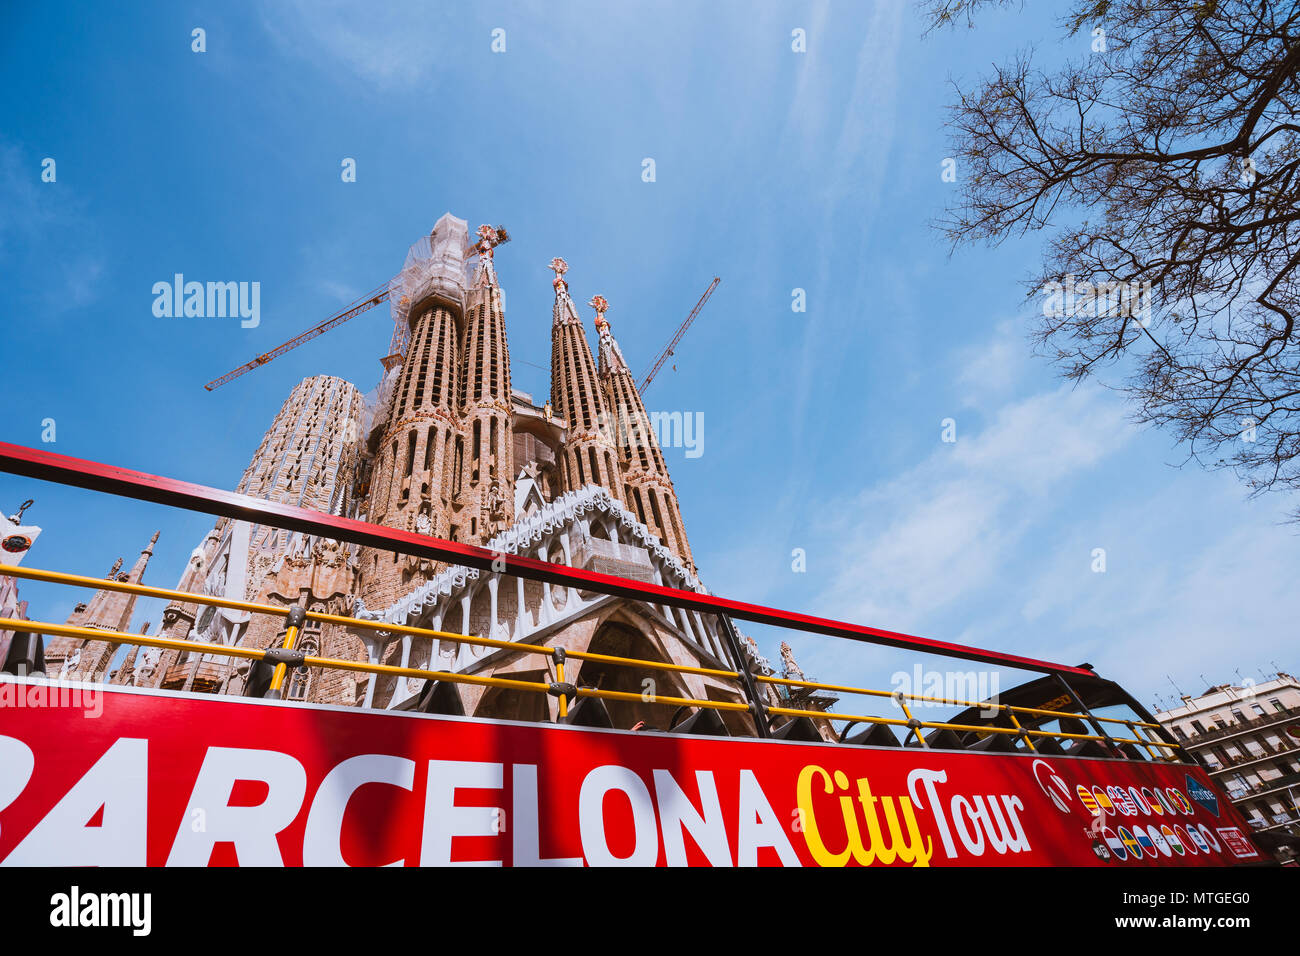 BARCELONA, SPAIN - April 25, 2018: Barcelona city tour touristic bus in ...